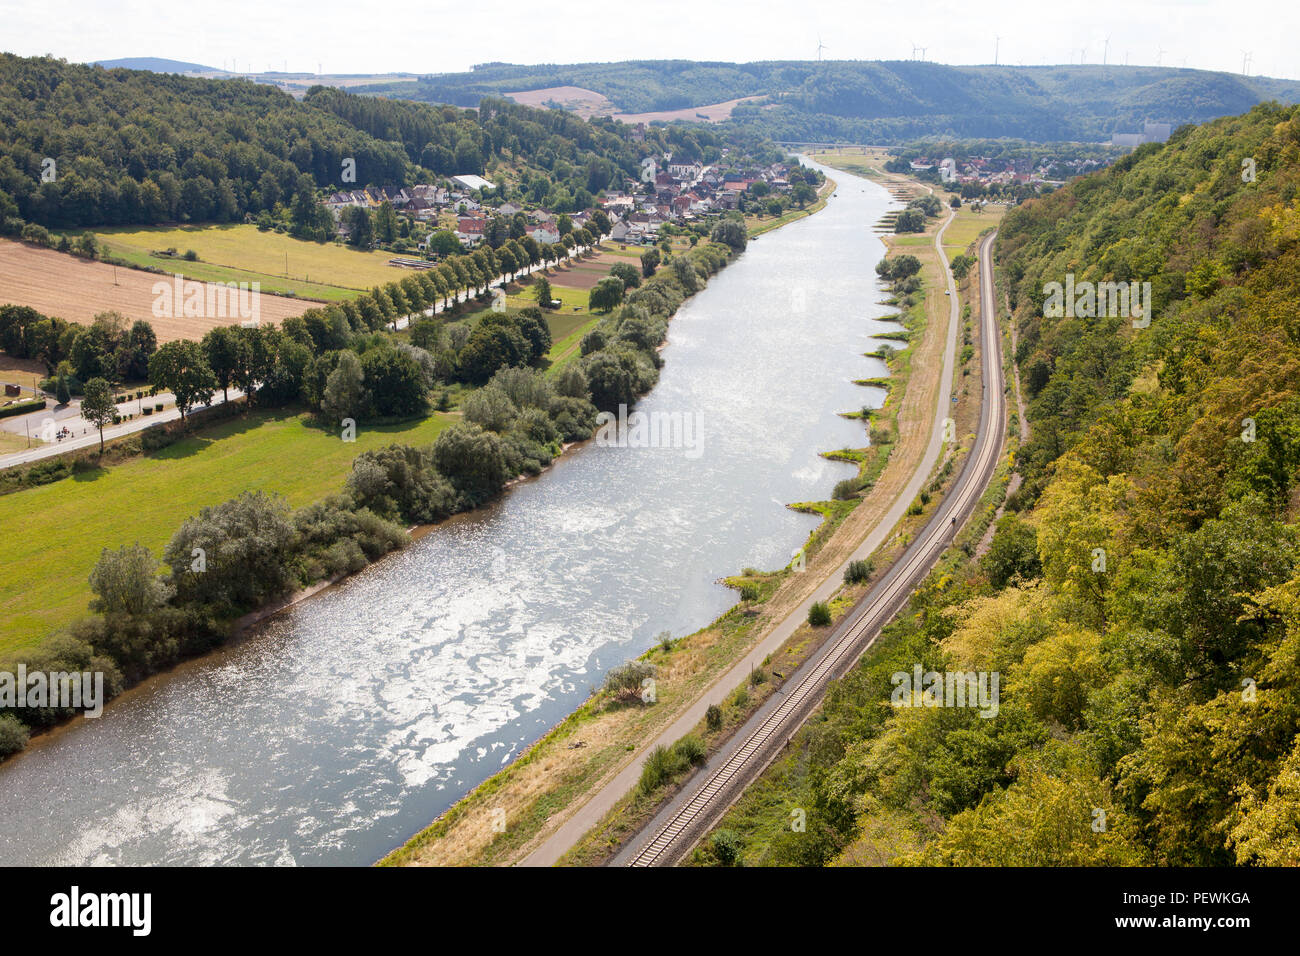 View from the Skywalk on River Weser, Beverungen, Weser Uplands, North Rhine-Westphalia, Germany, Europe Stock Photo